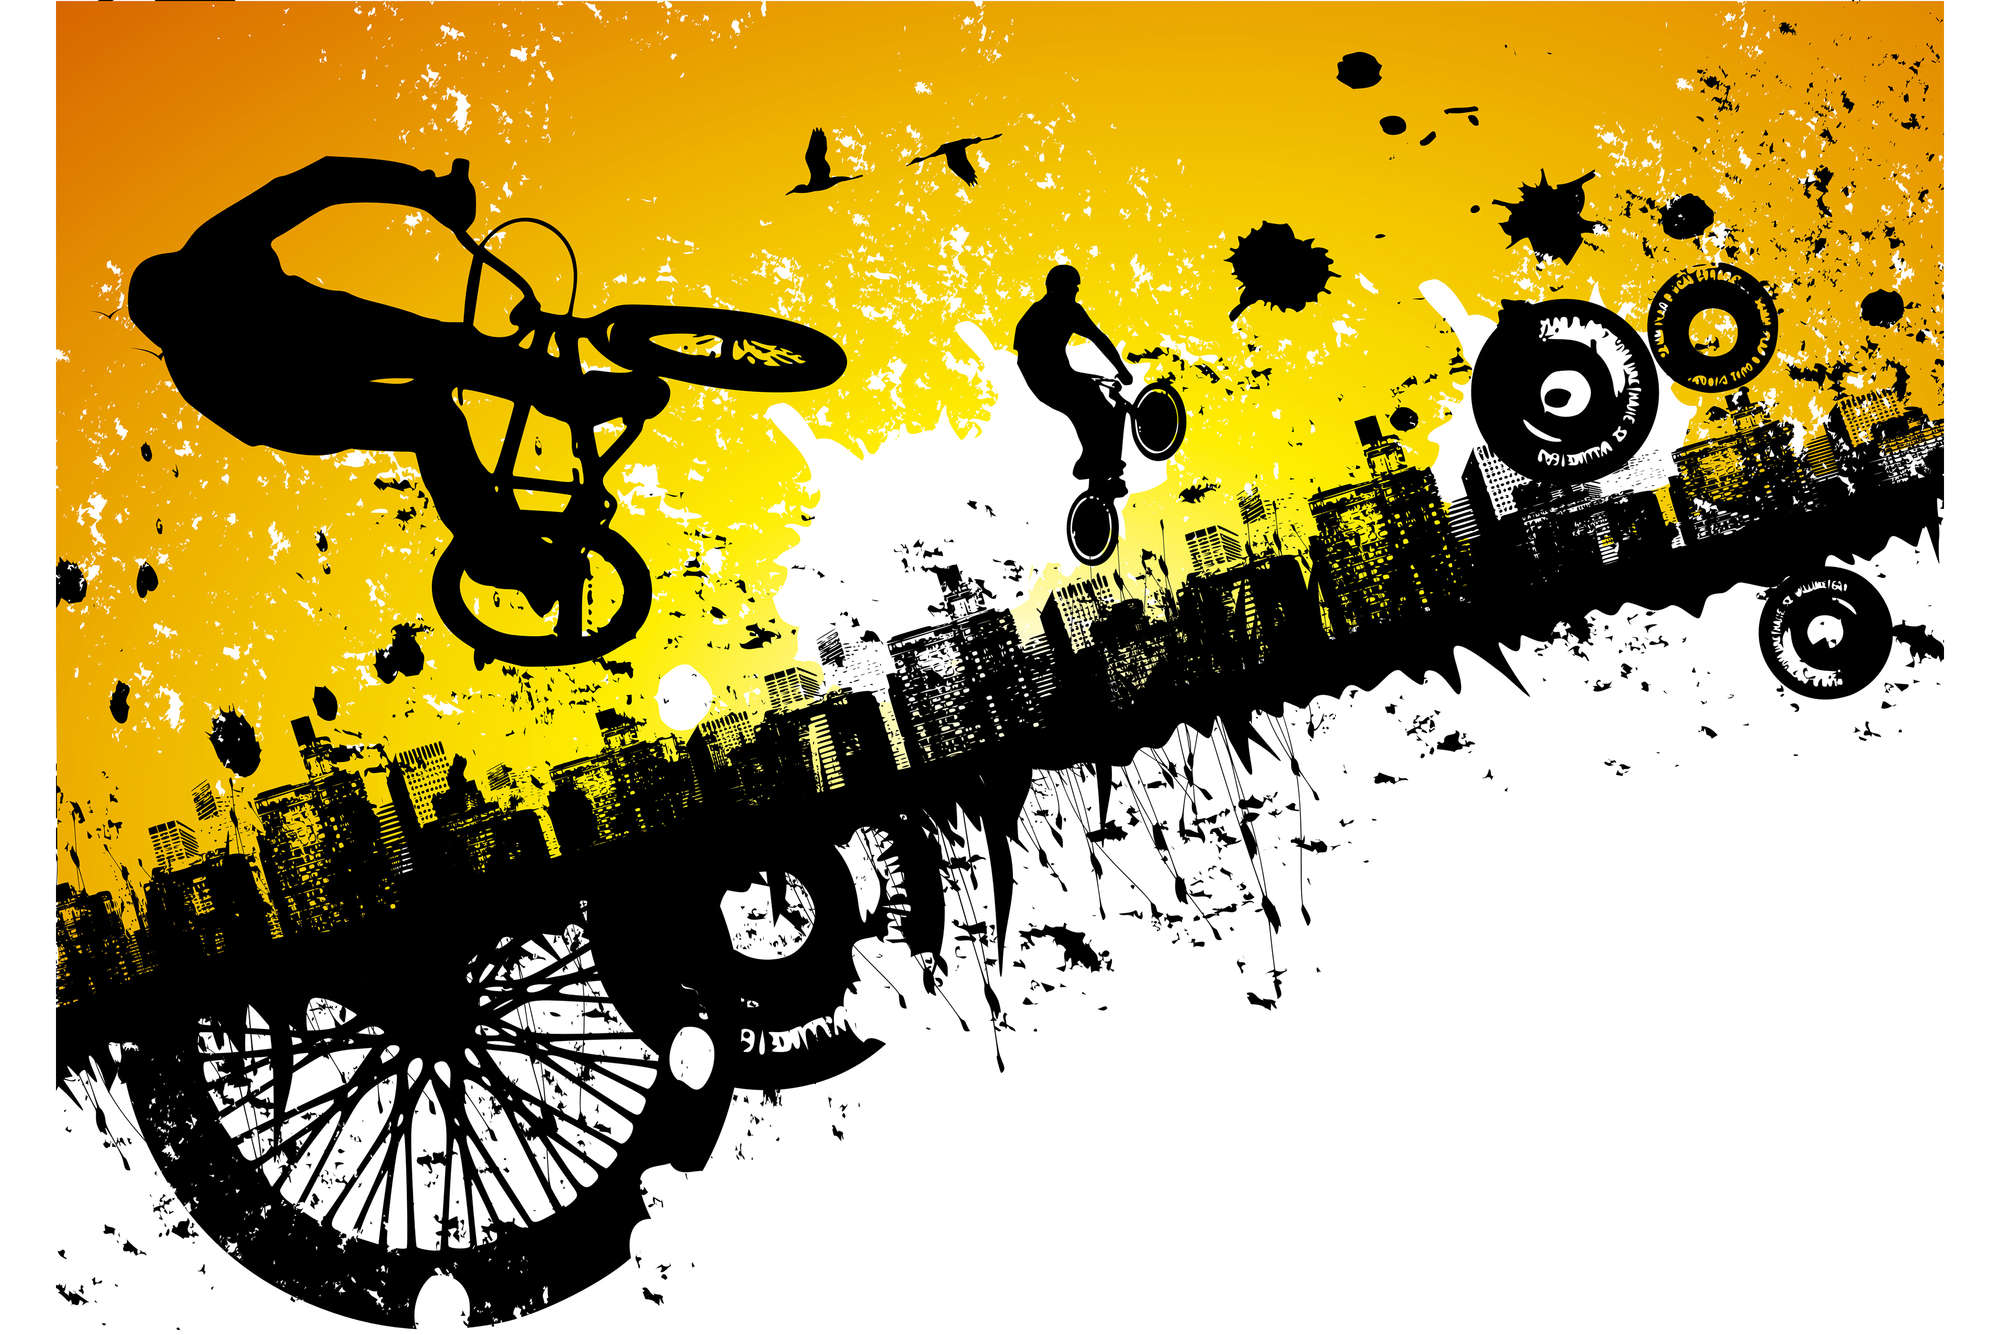             Bicycle Rider with BMX Wallpaper - Matt Smooth Non-woven
        